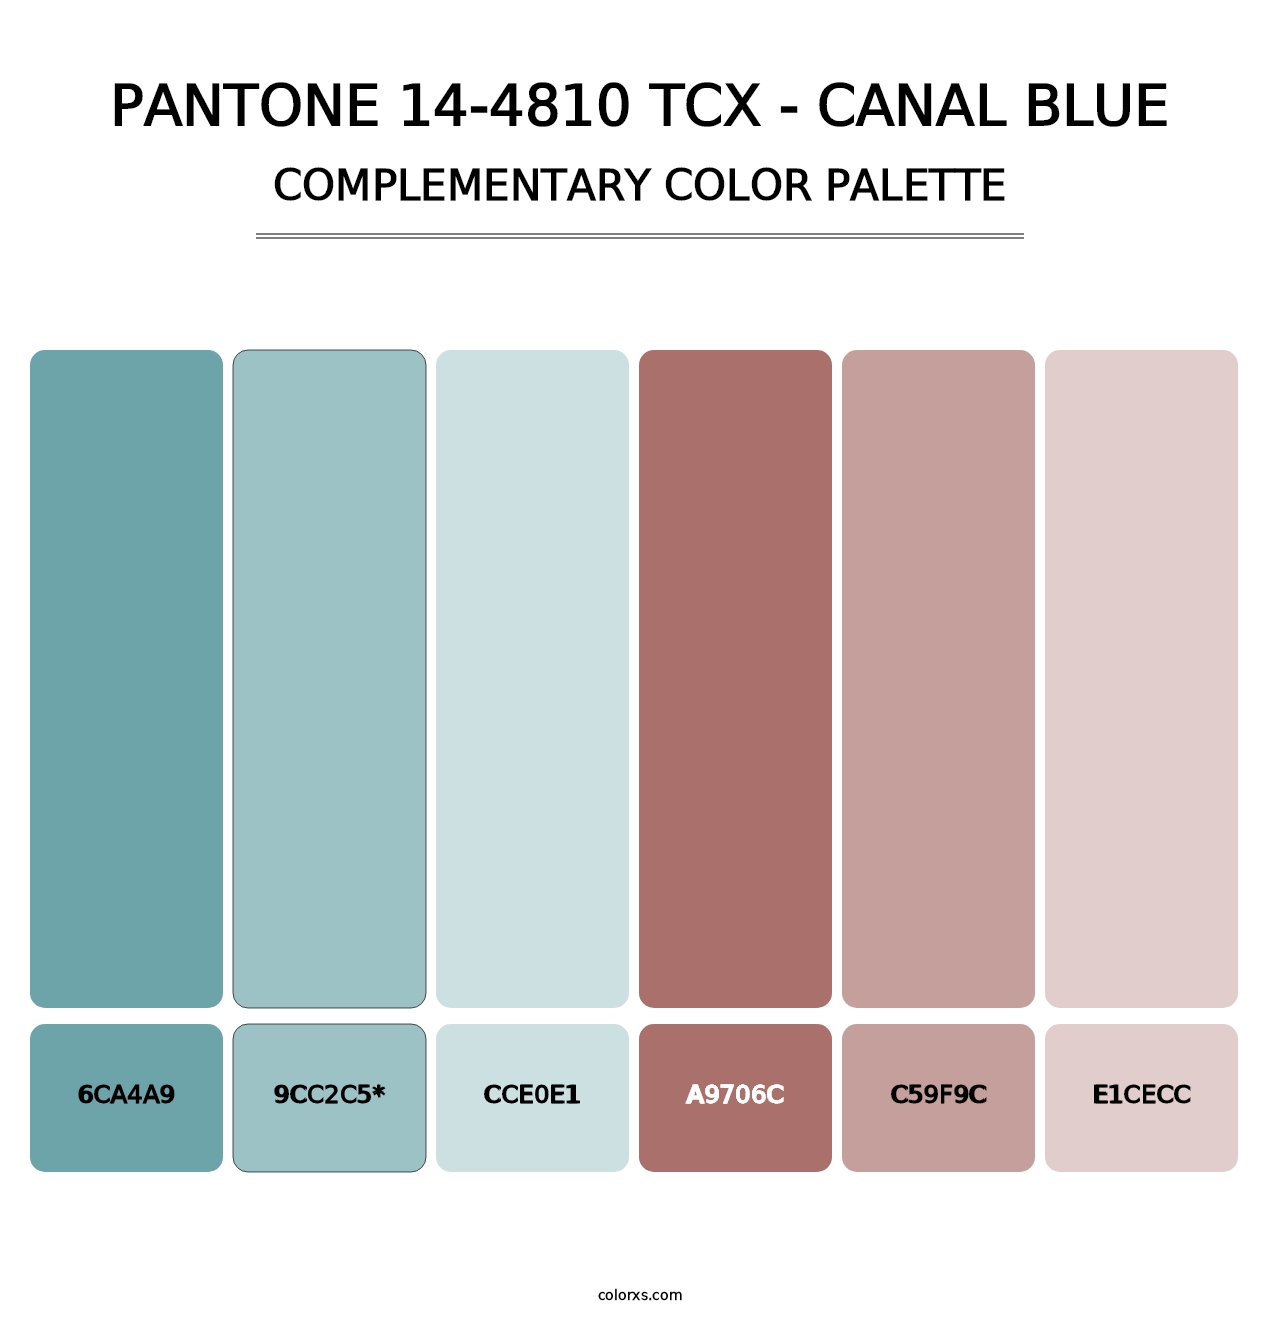 PANTONE 14-4810 TCX - Canal Blue - Complementary Color Palette